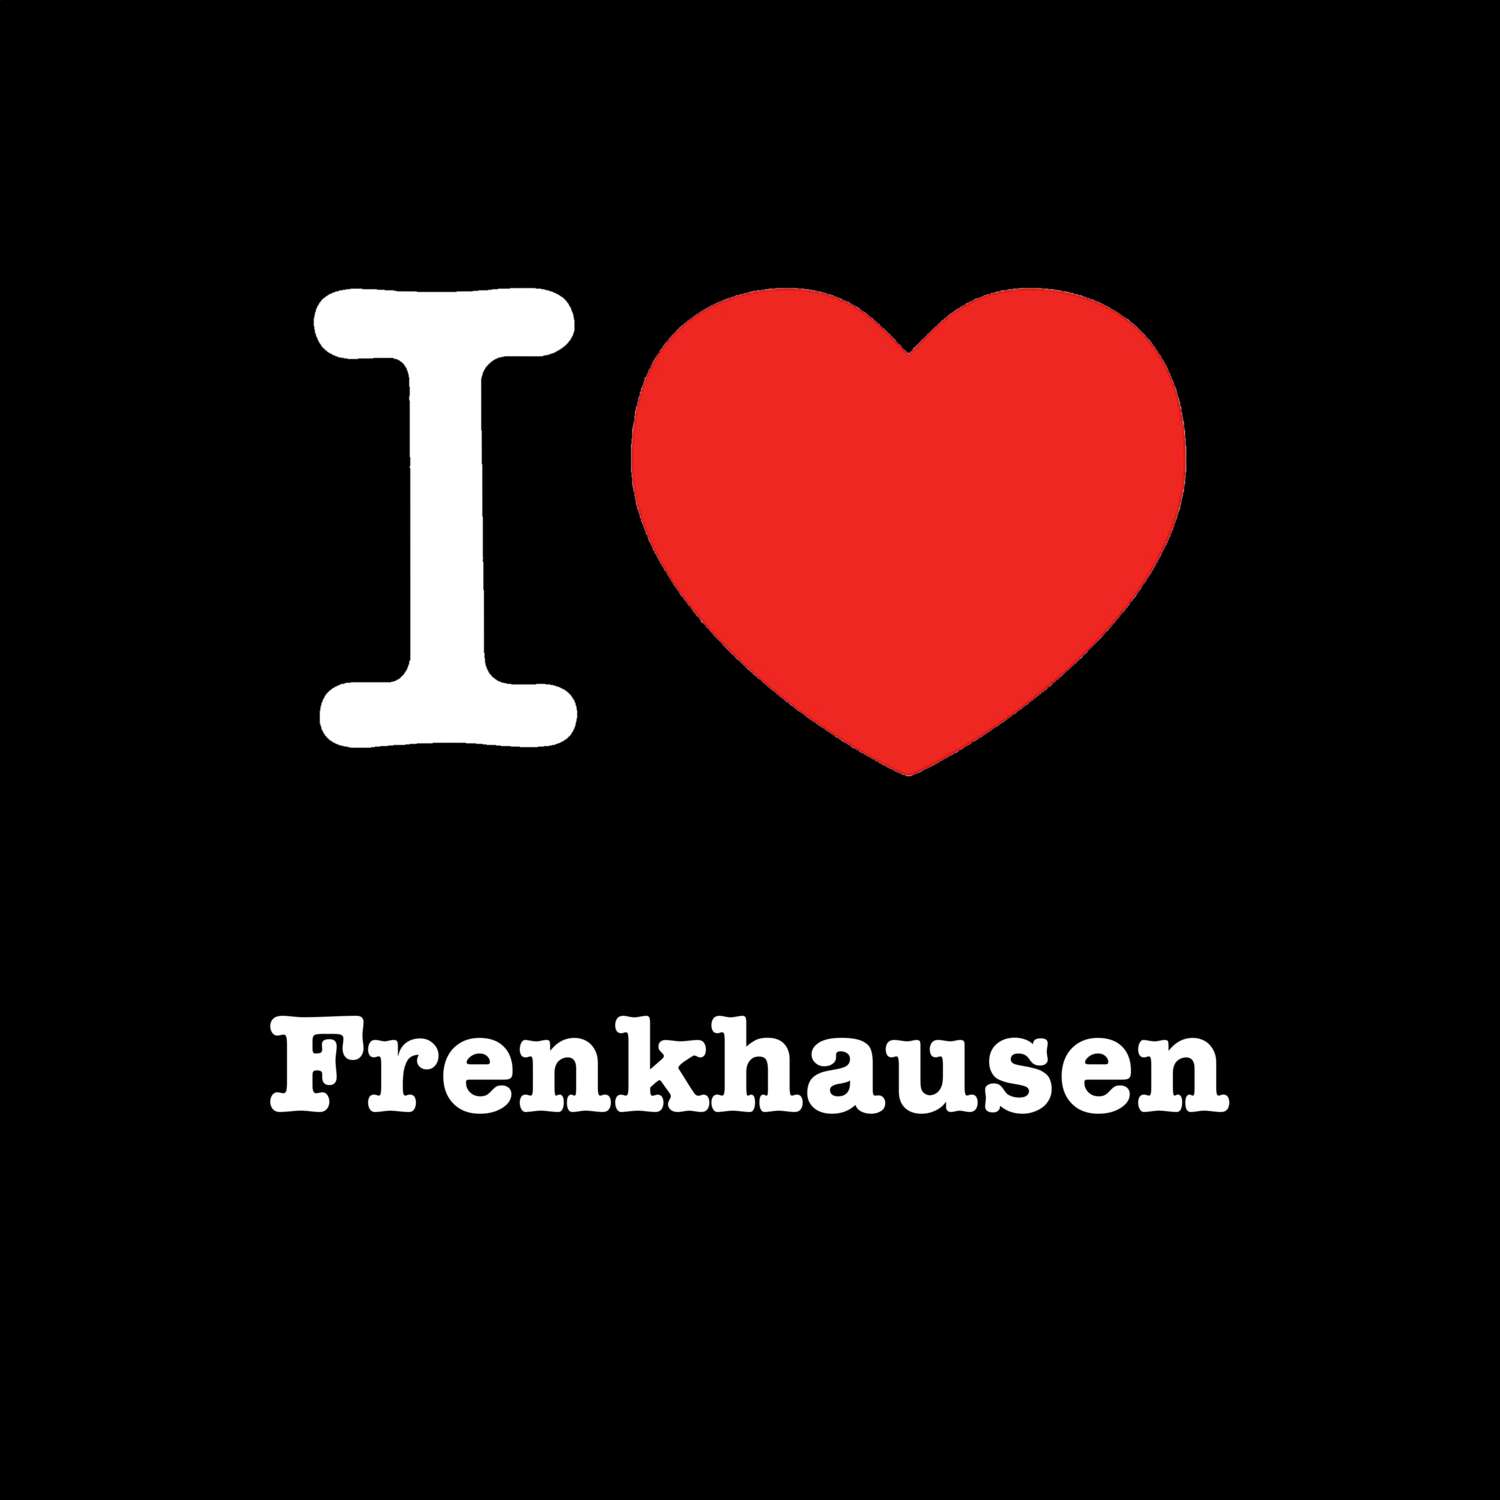 Frenkhausen T-Shirt »I love«